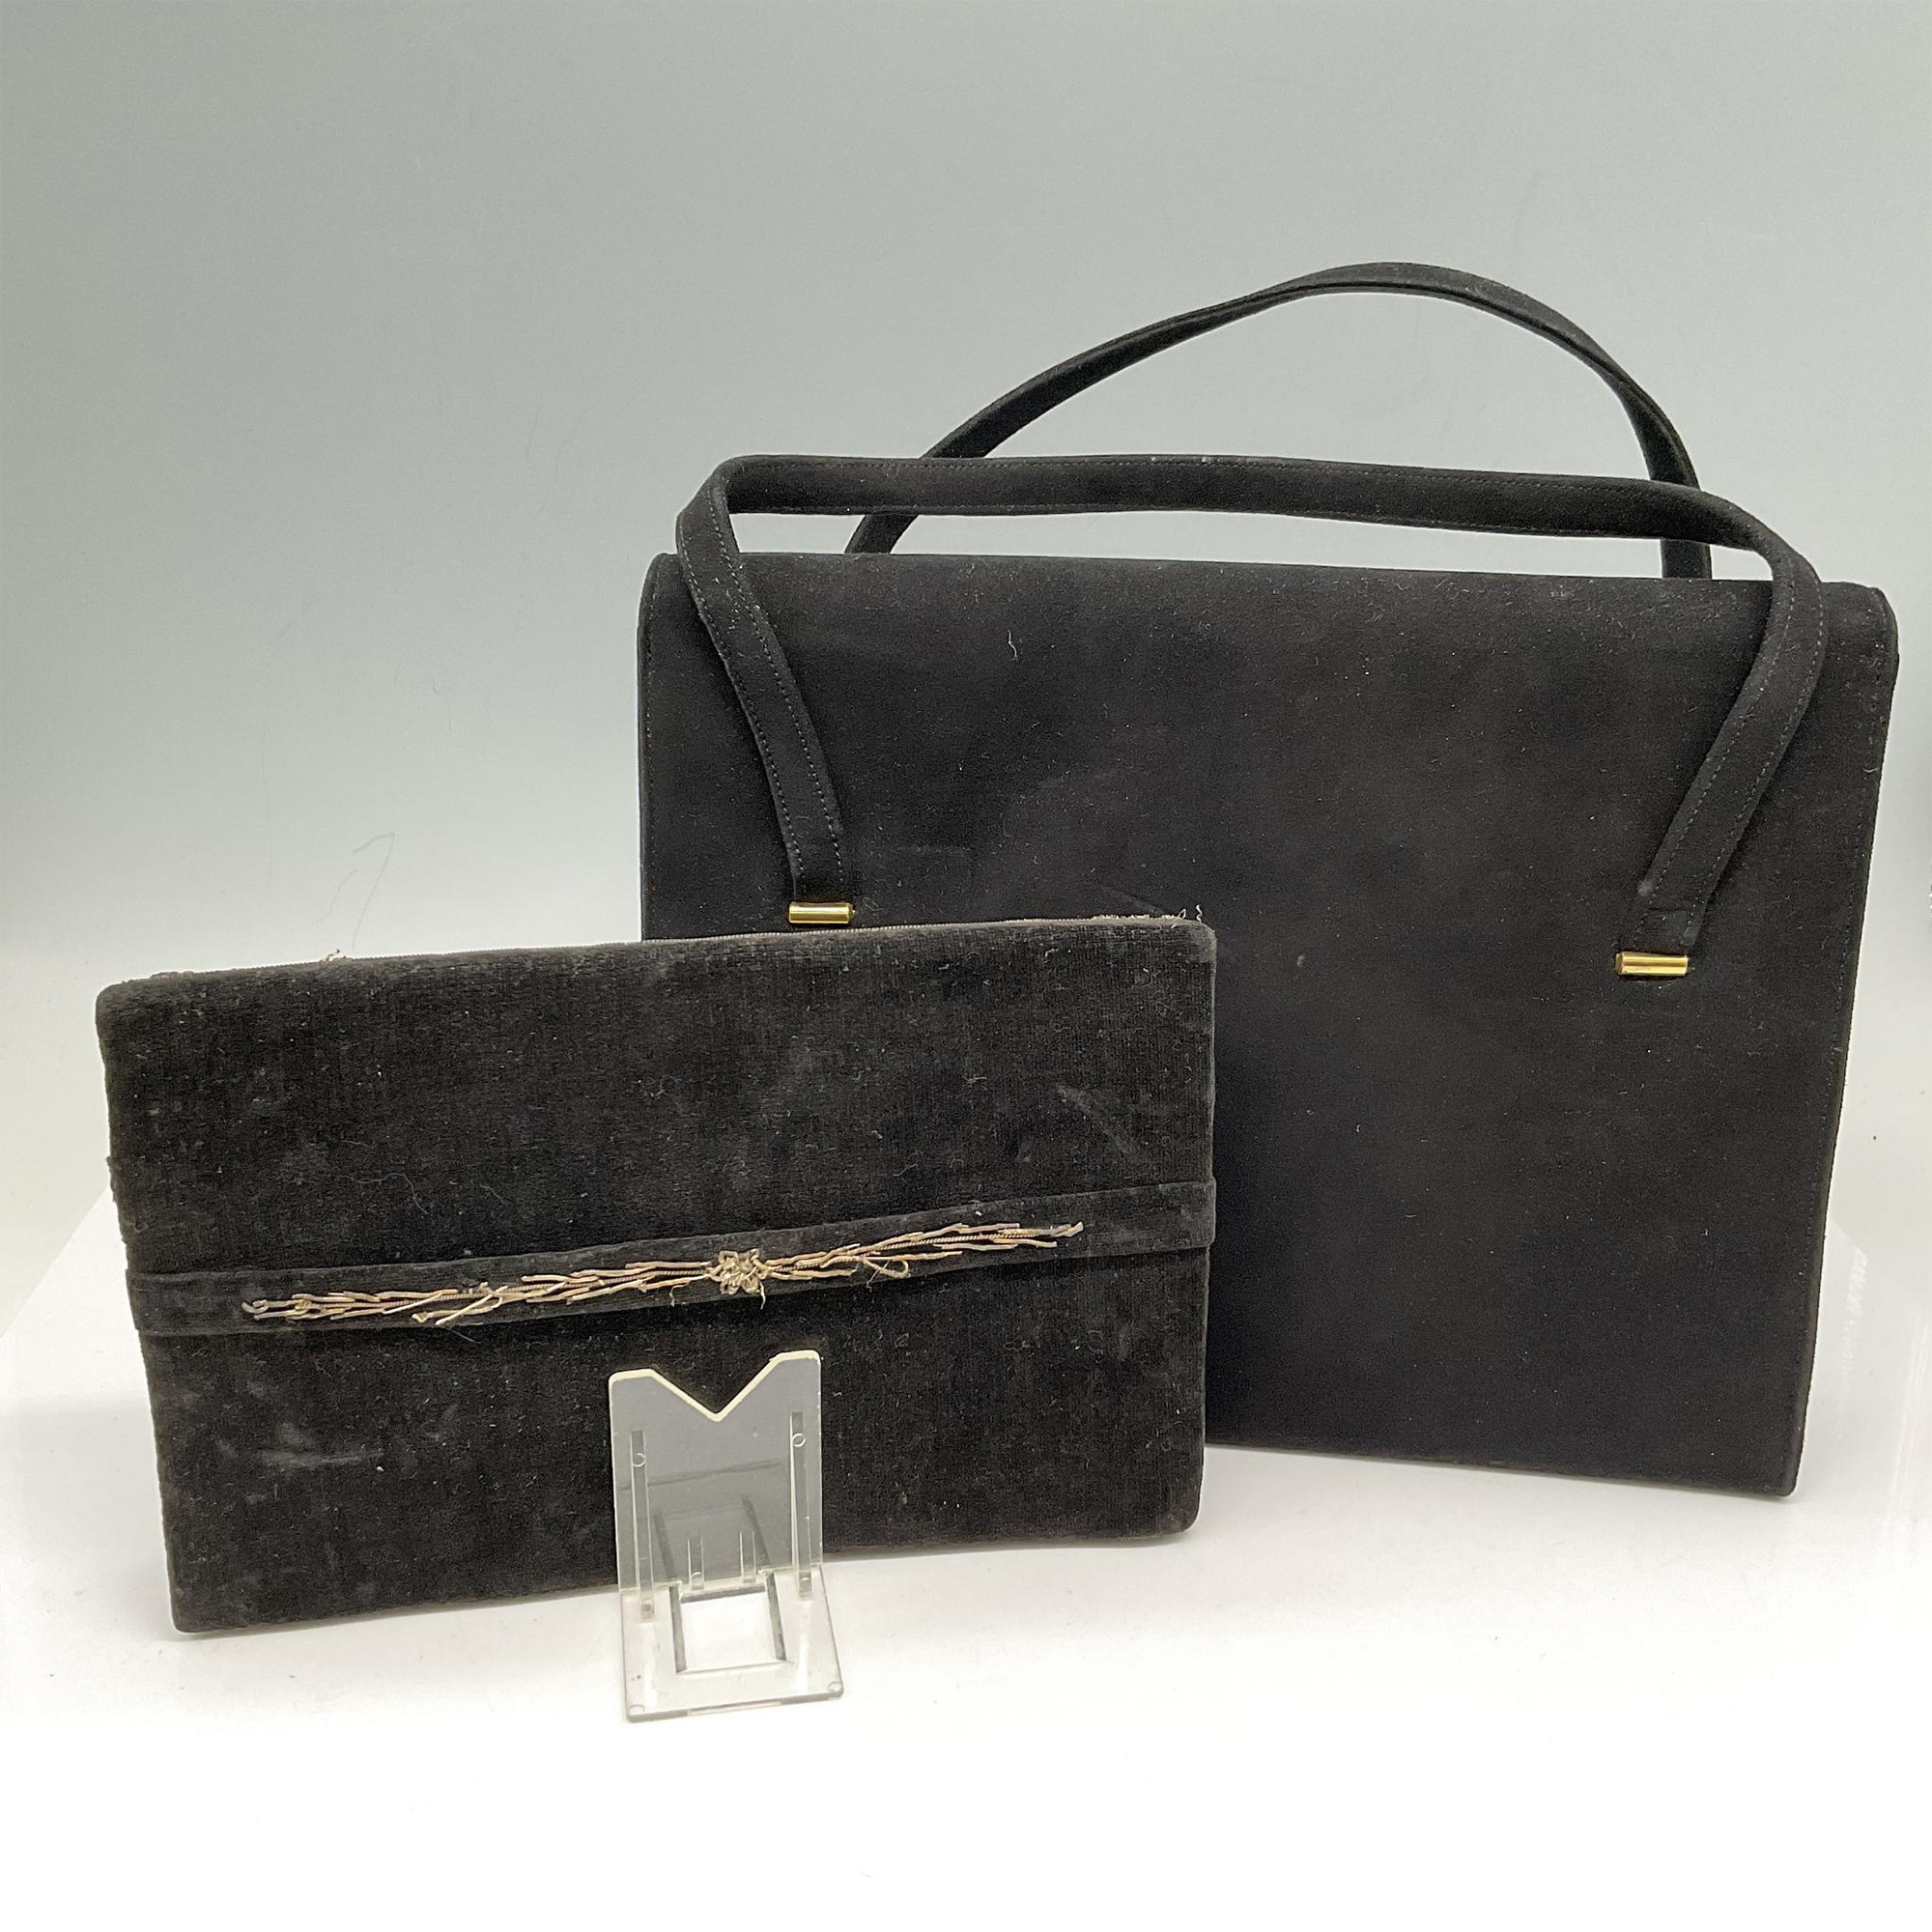 2pc Perma Suede Handbag and Clutch - Image 2 of 2